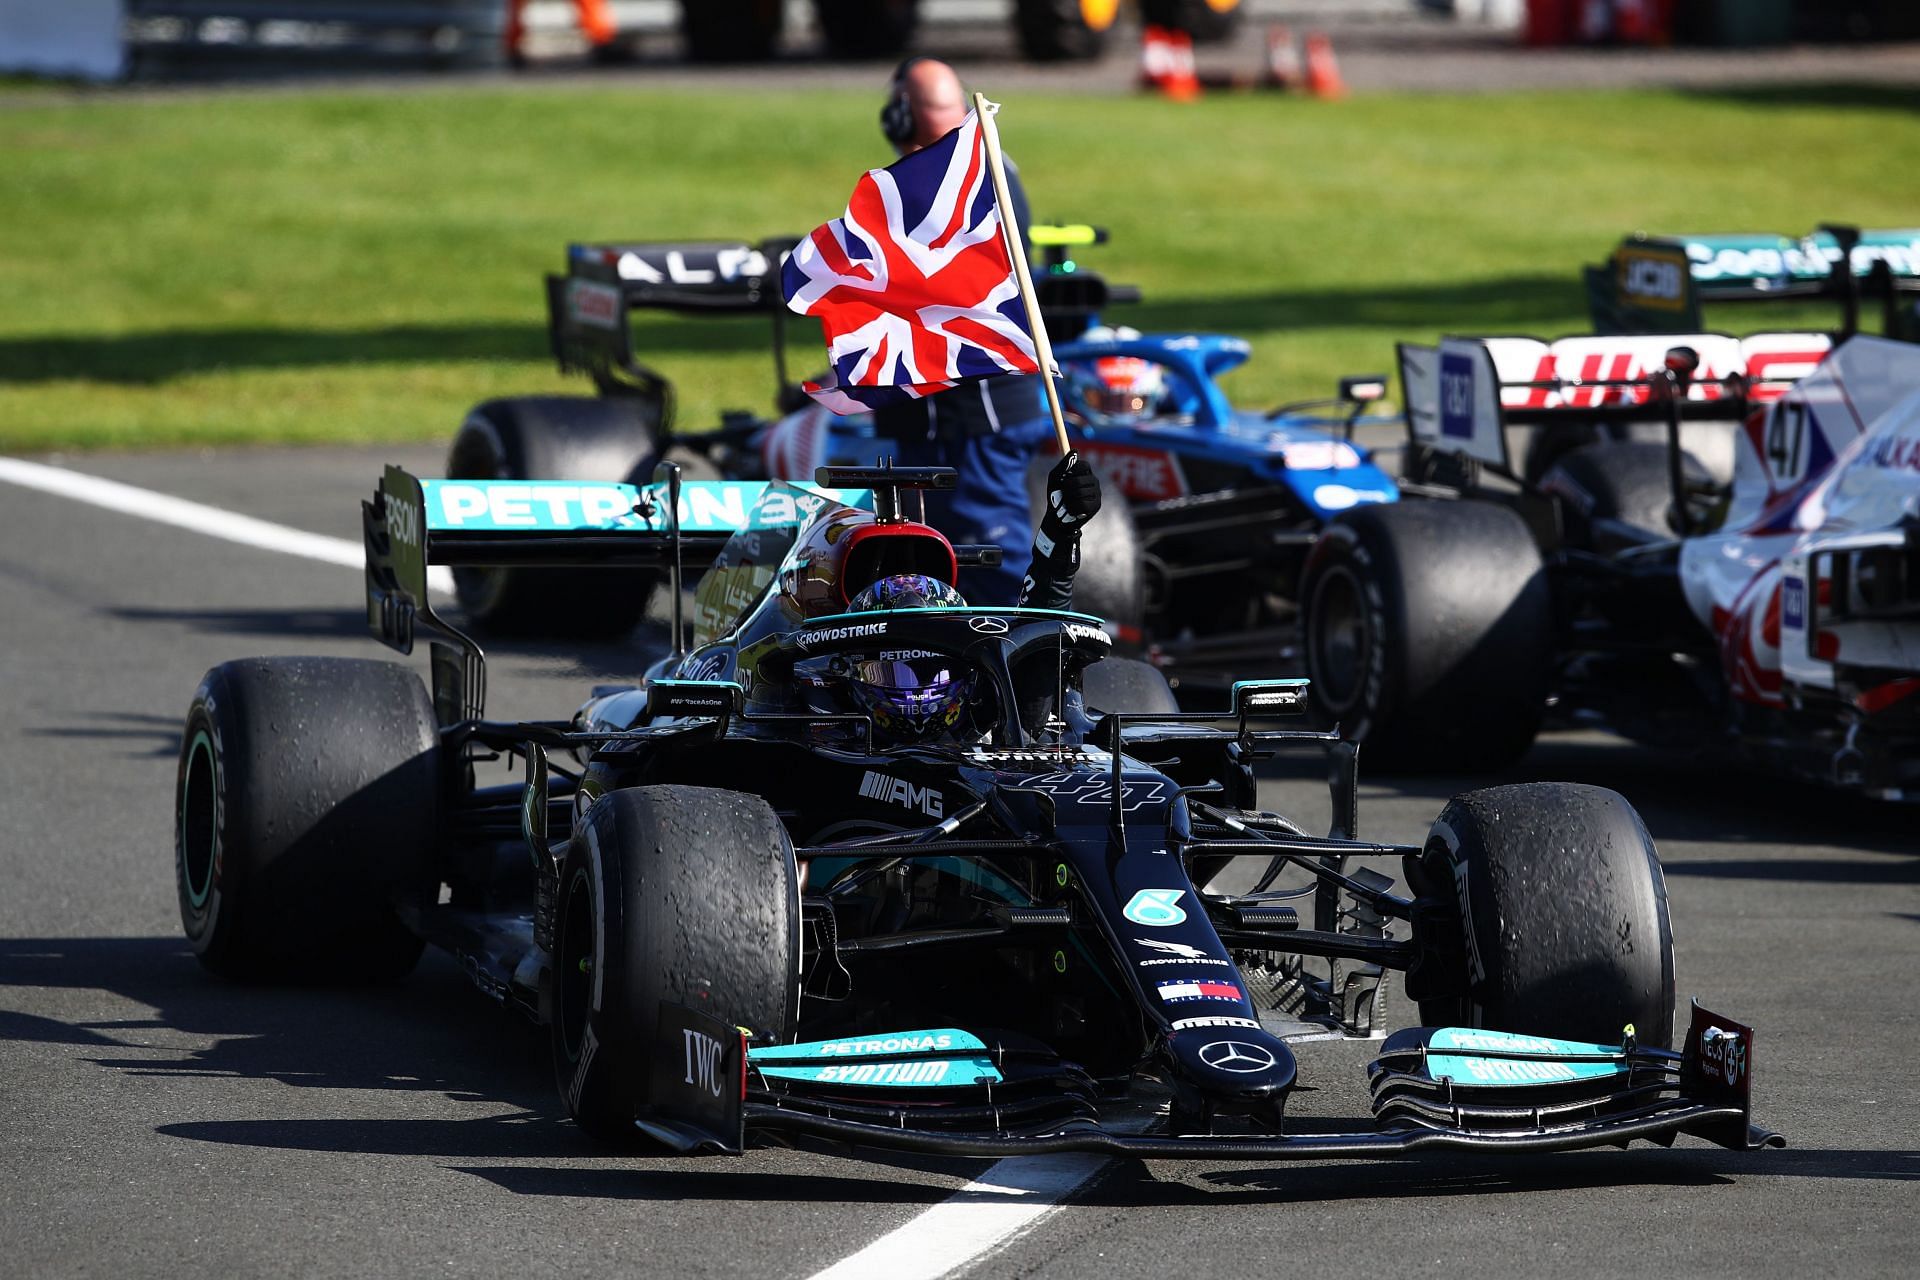 F1 Grand Prix of Great Britain - Lewis Hamilton